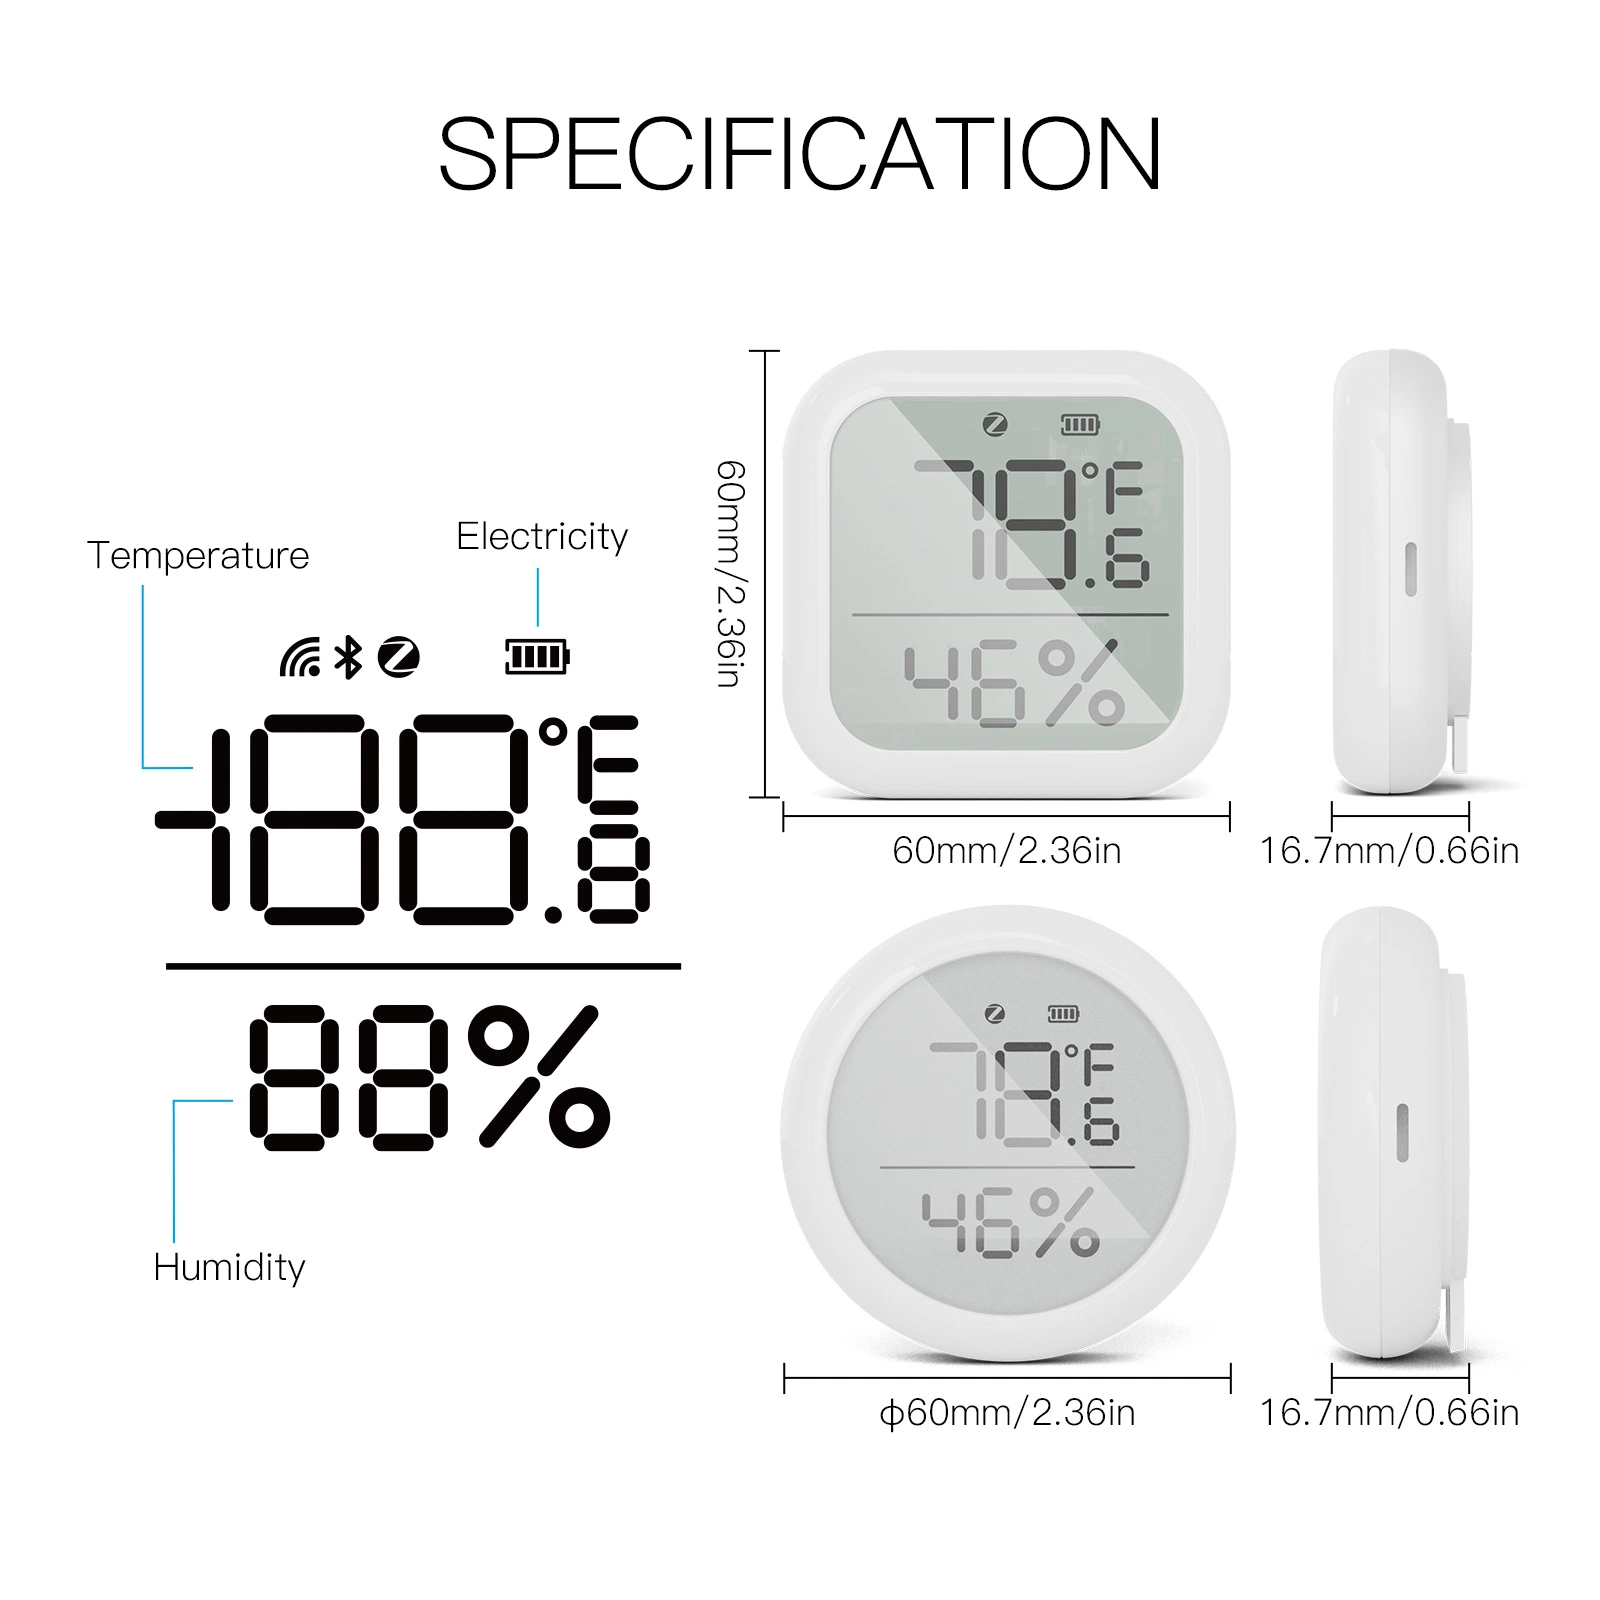 Tuya Smart Zigbee Temperature and Humidity Sensor with Digital LCD Display